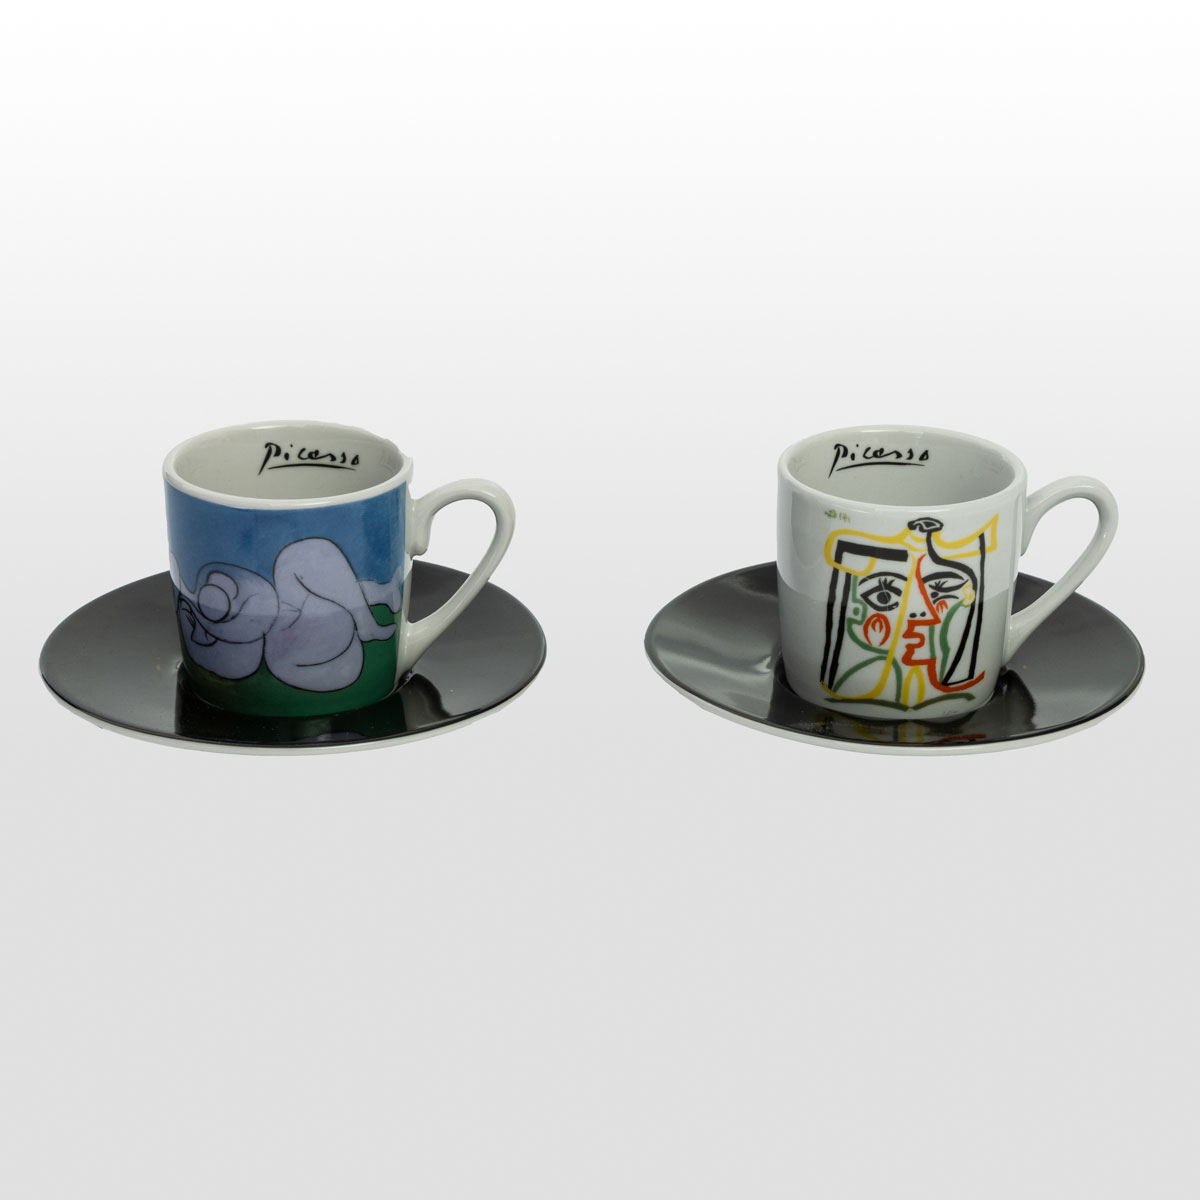 Pablo Picasso set of 2 espresso cups and saucers : Jacqueline, The nap (detail 1)